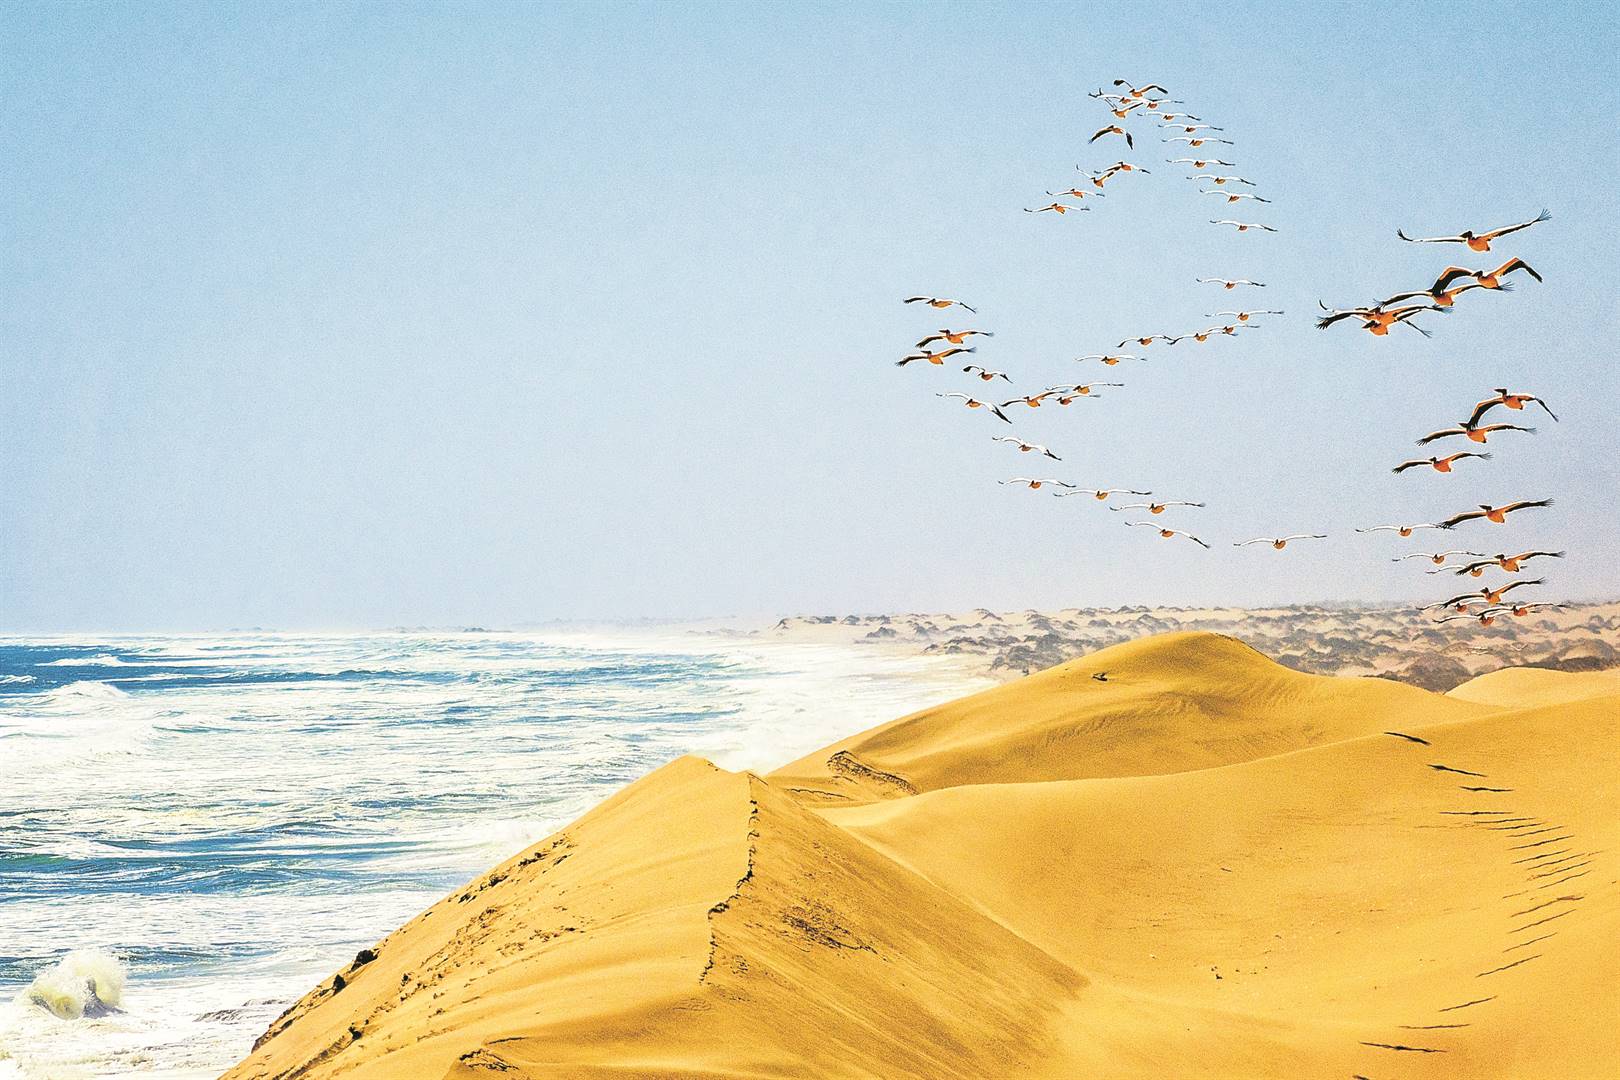 The coast of Namibia. Photo: ISTOCK